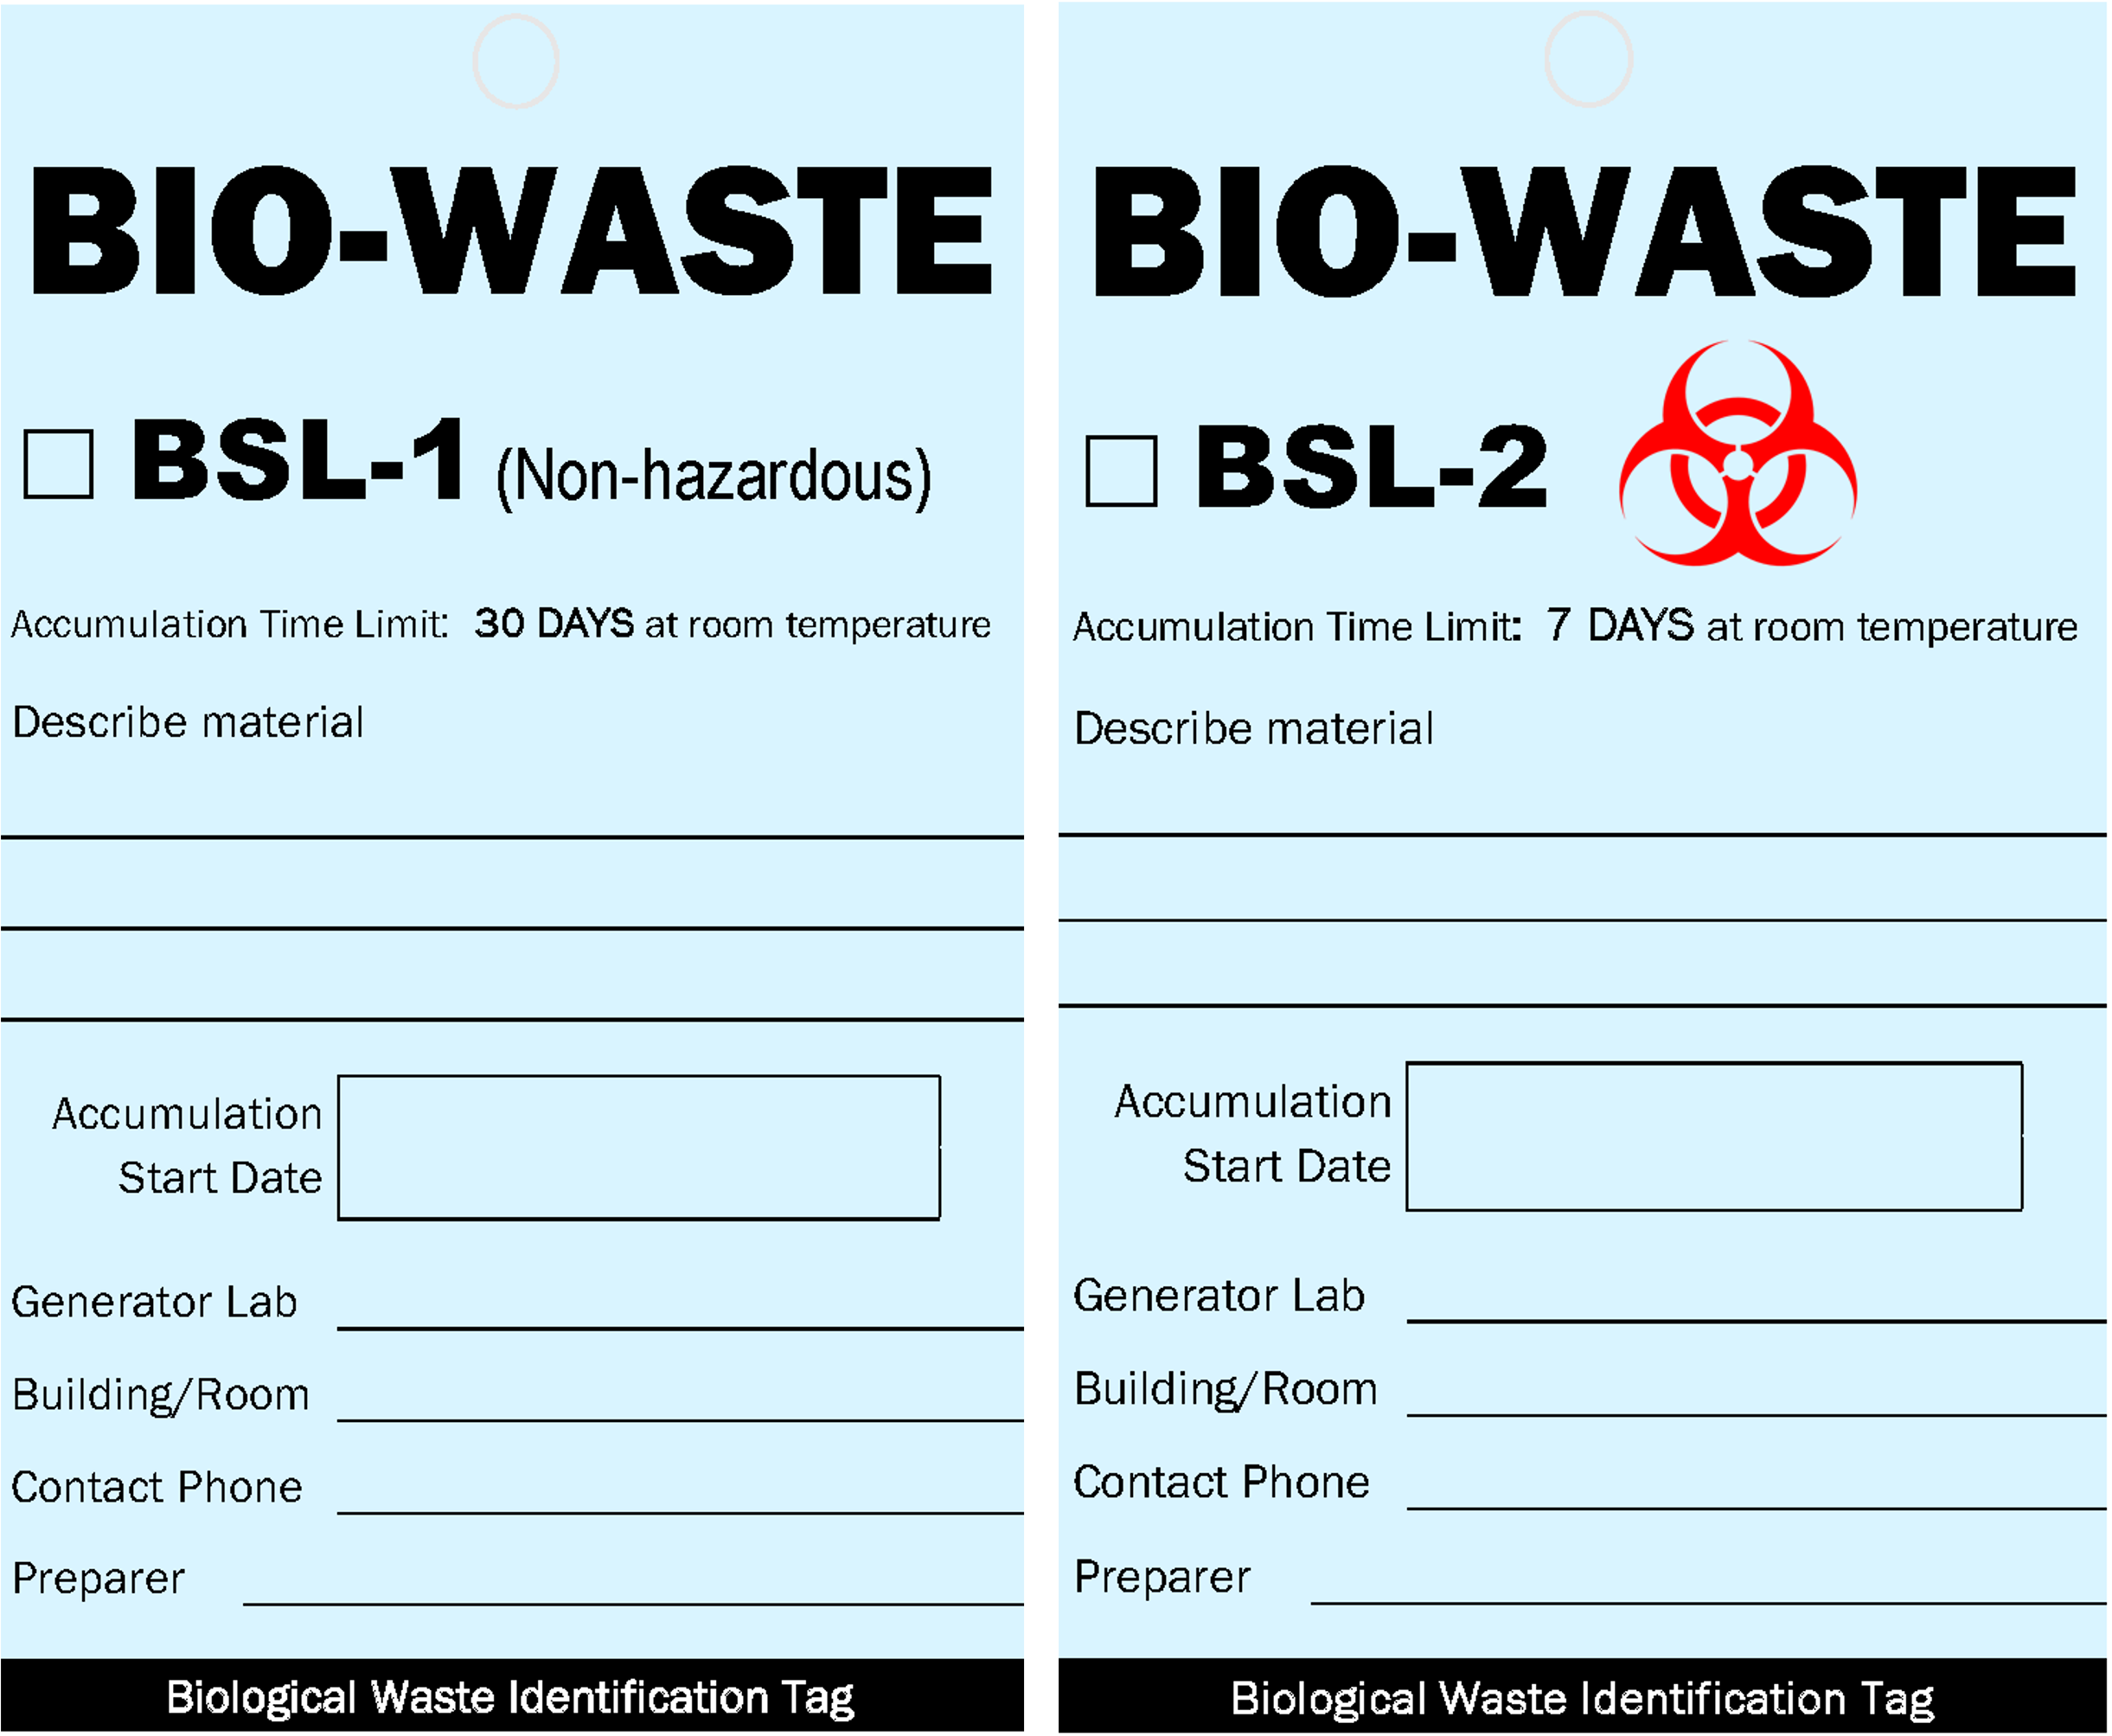 Biological waste identification tag